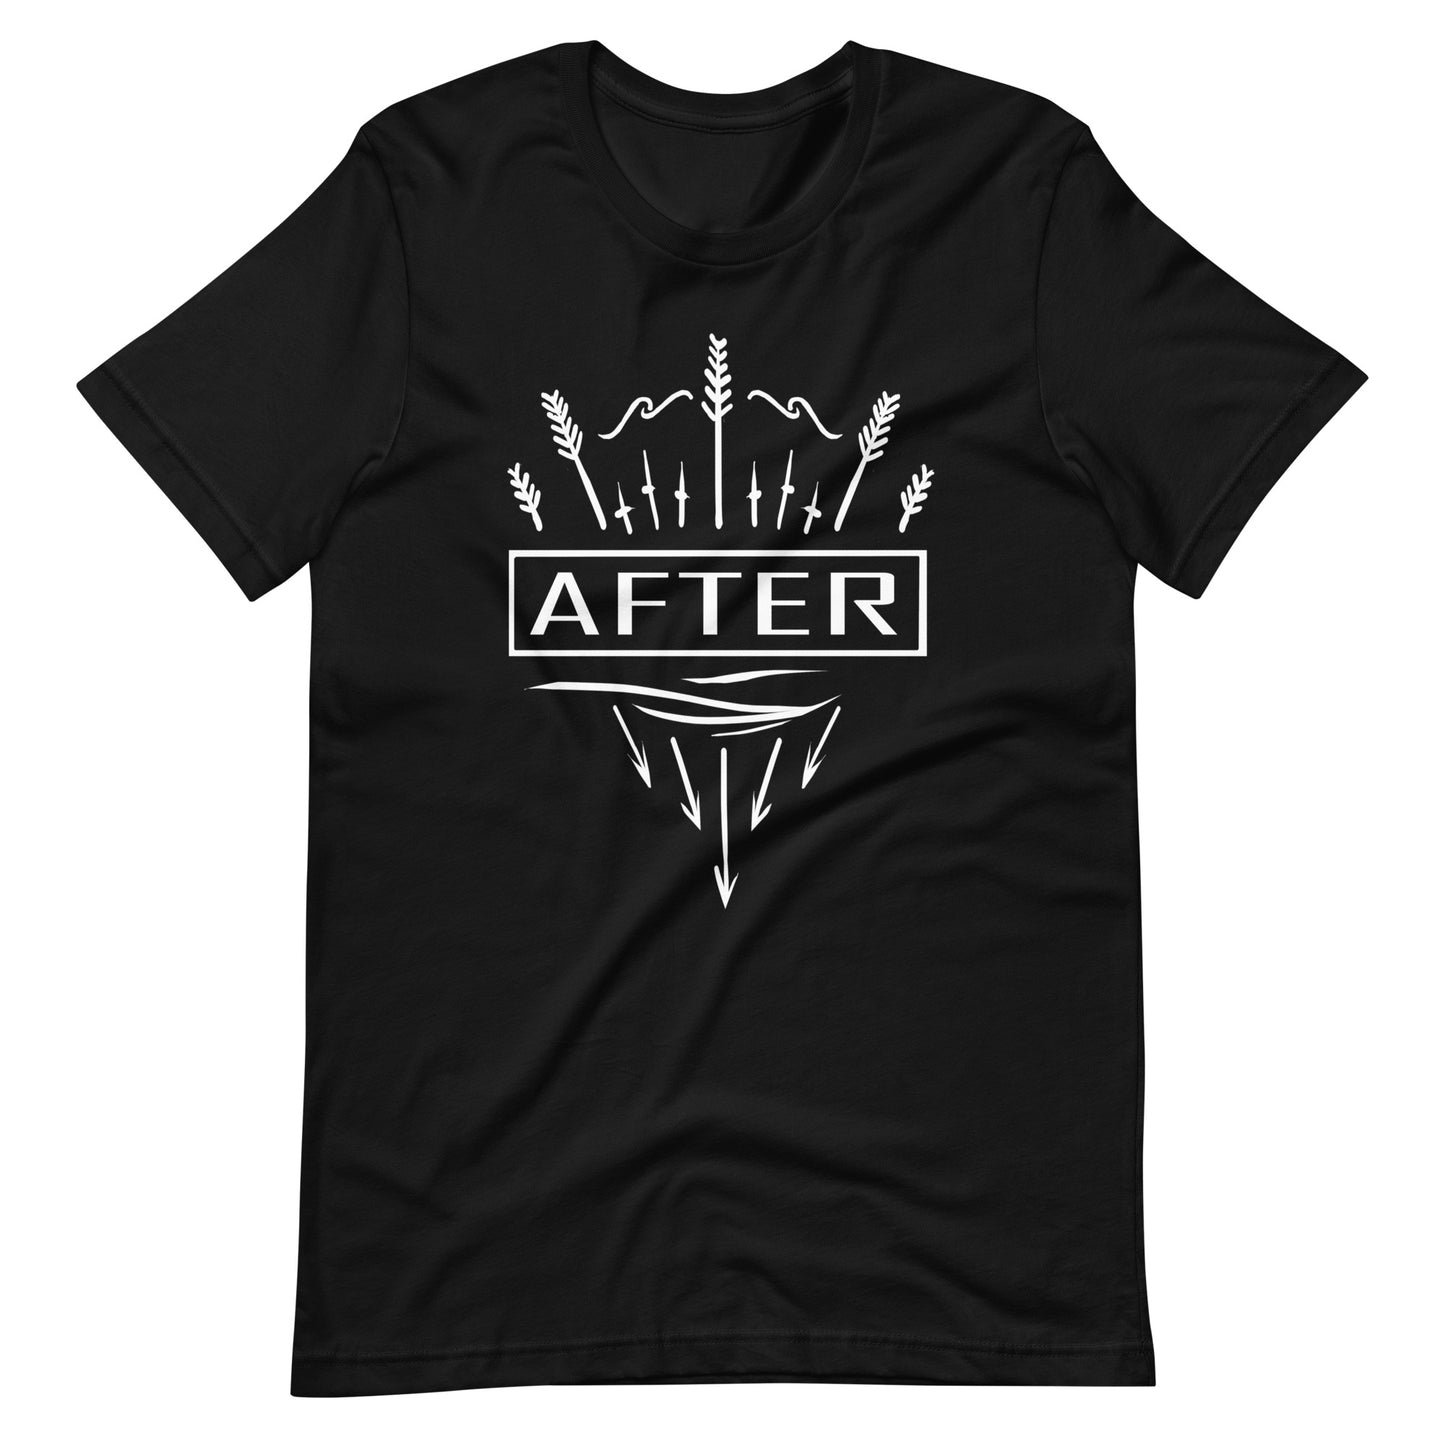 After - Men's t-shirt - Black Front